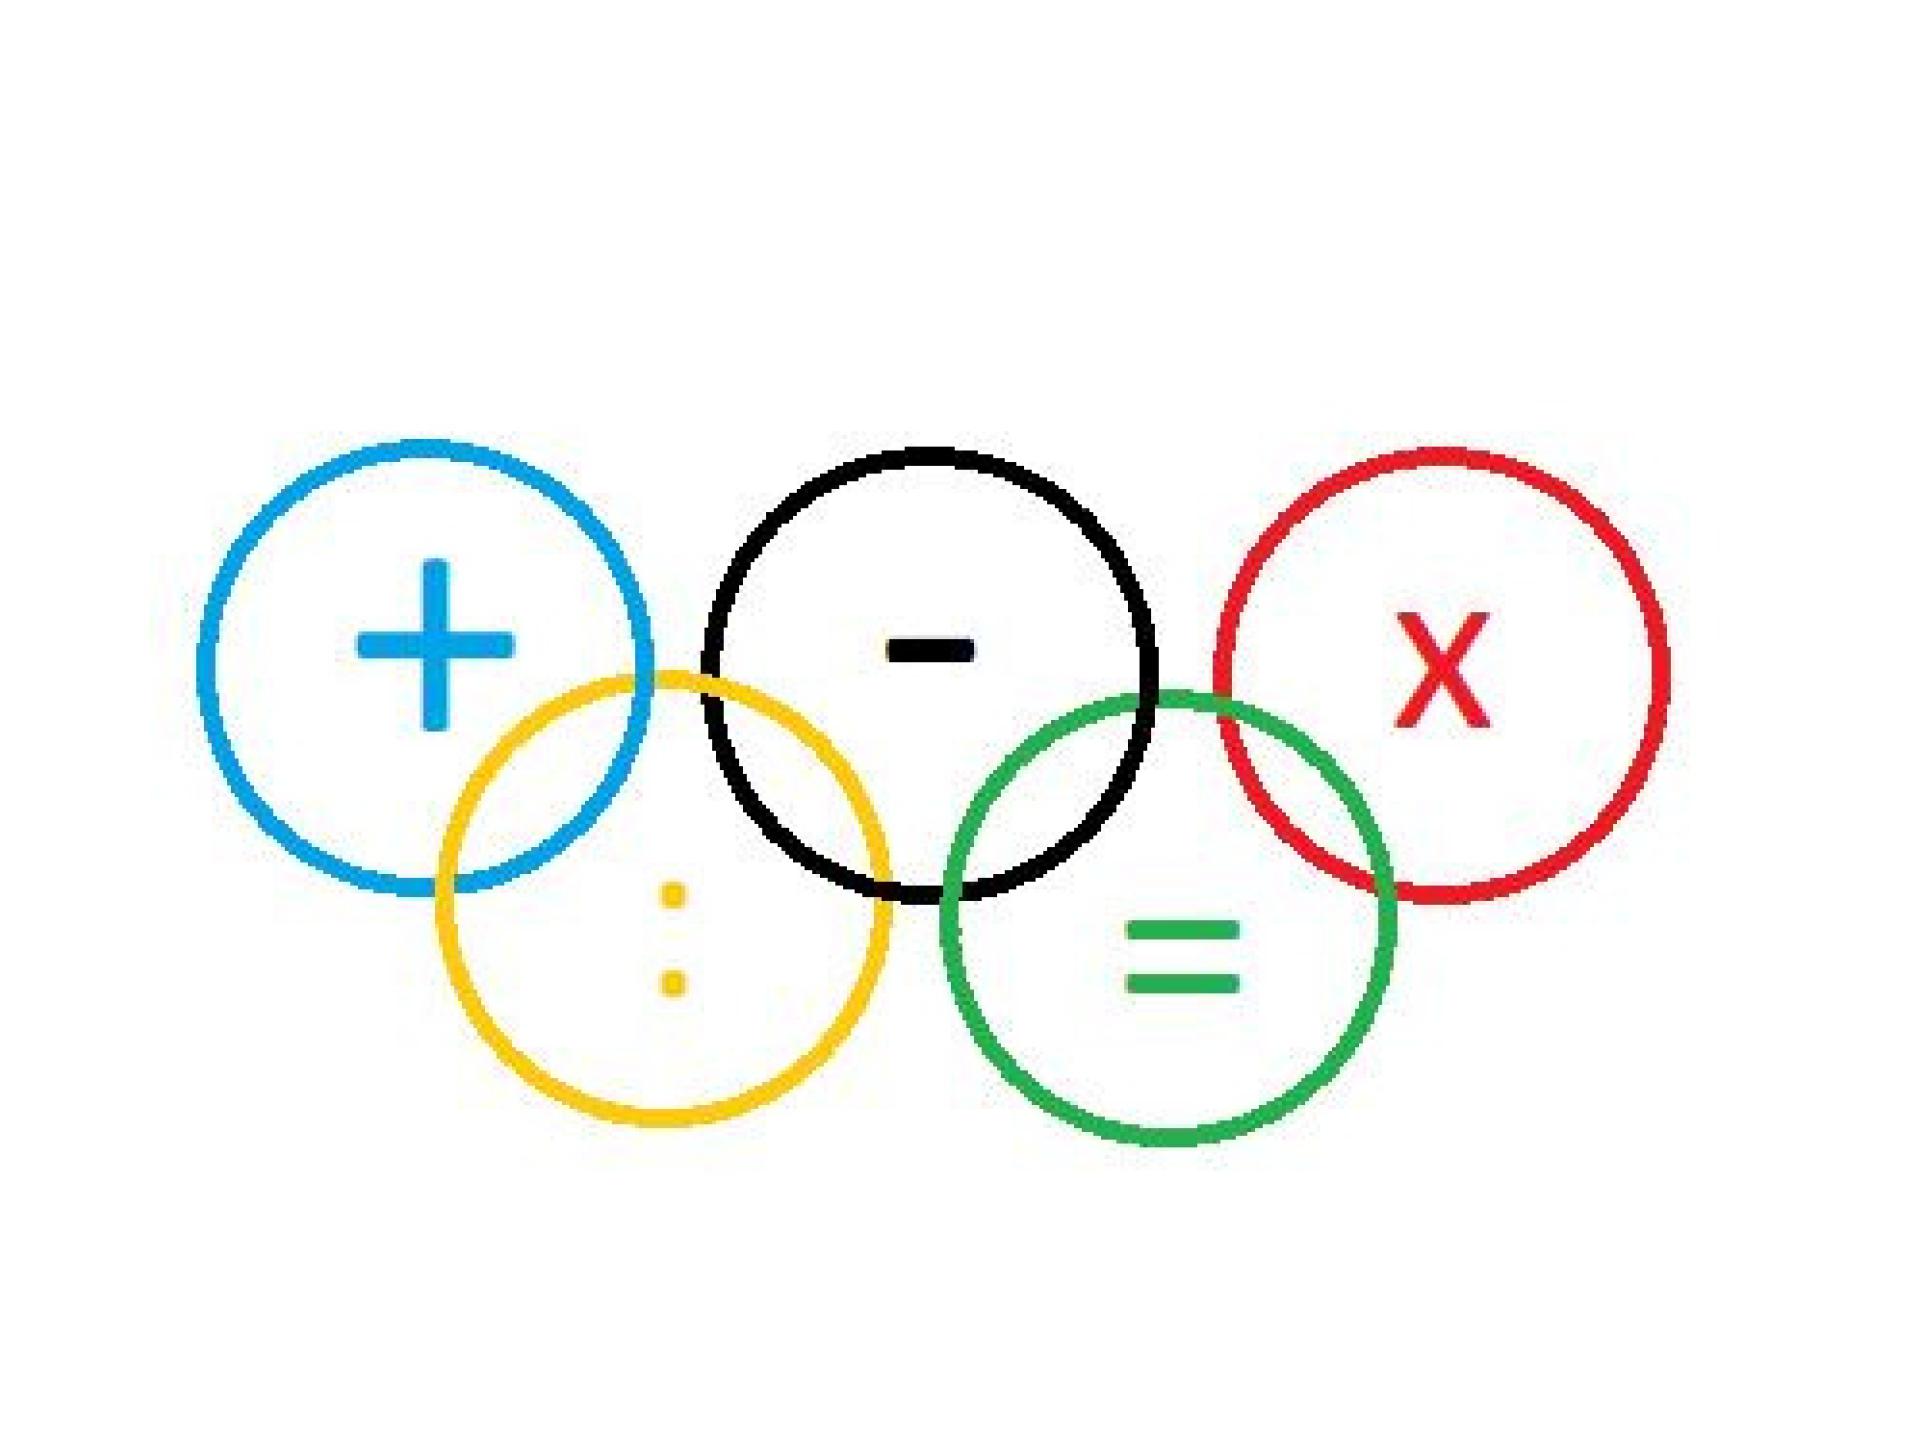 Matematická olympiáda - okresné kolo